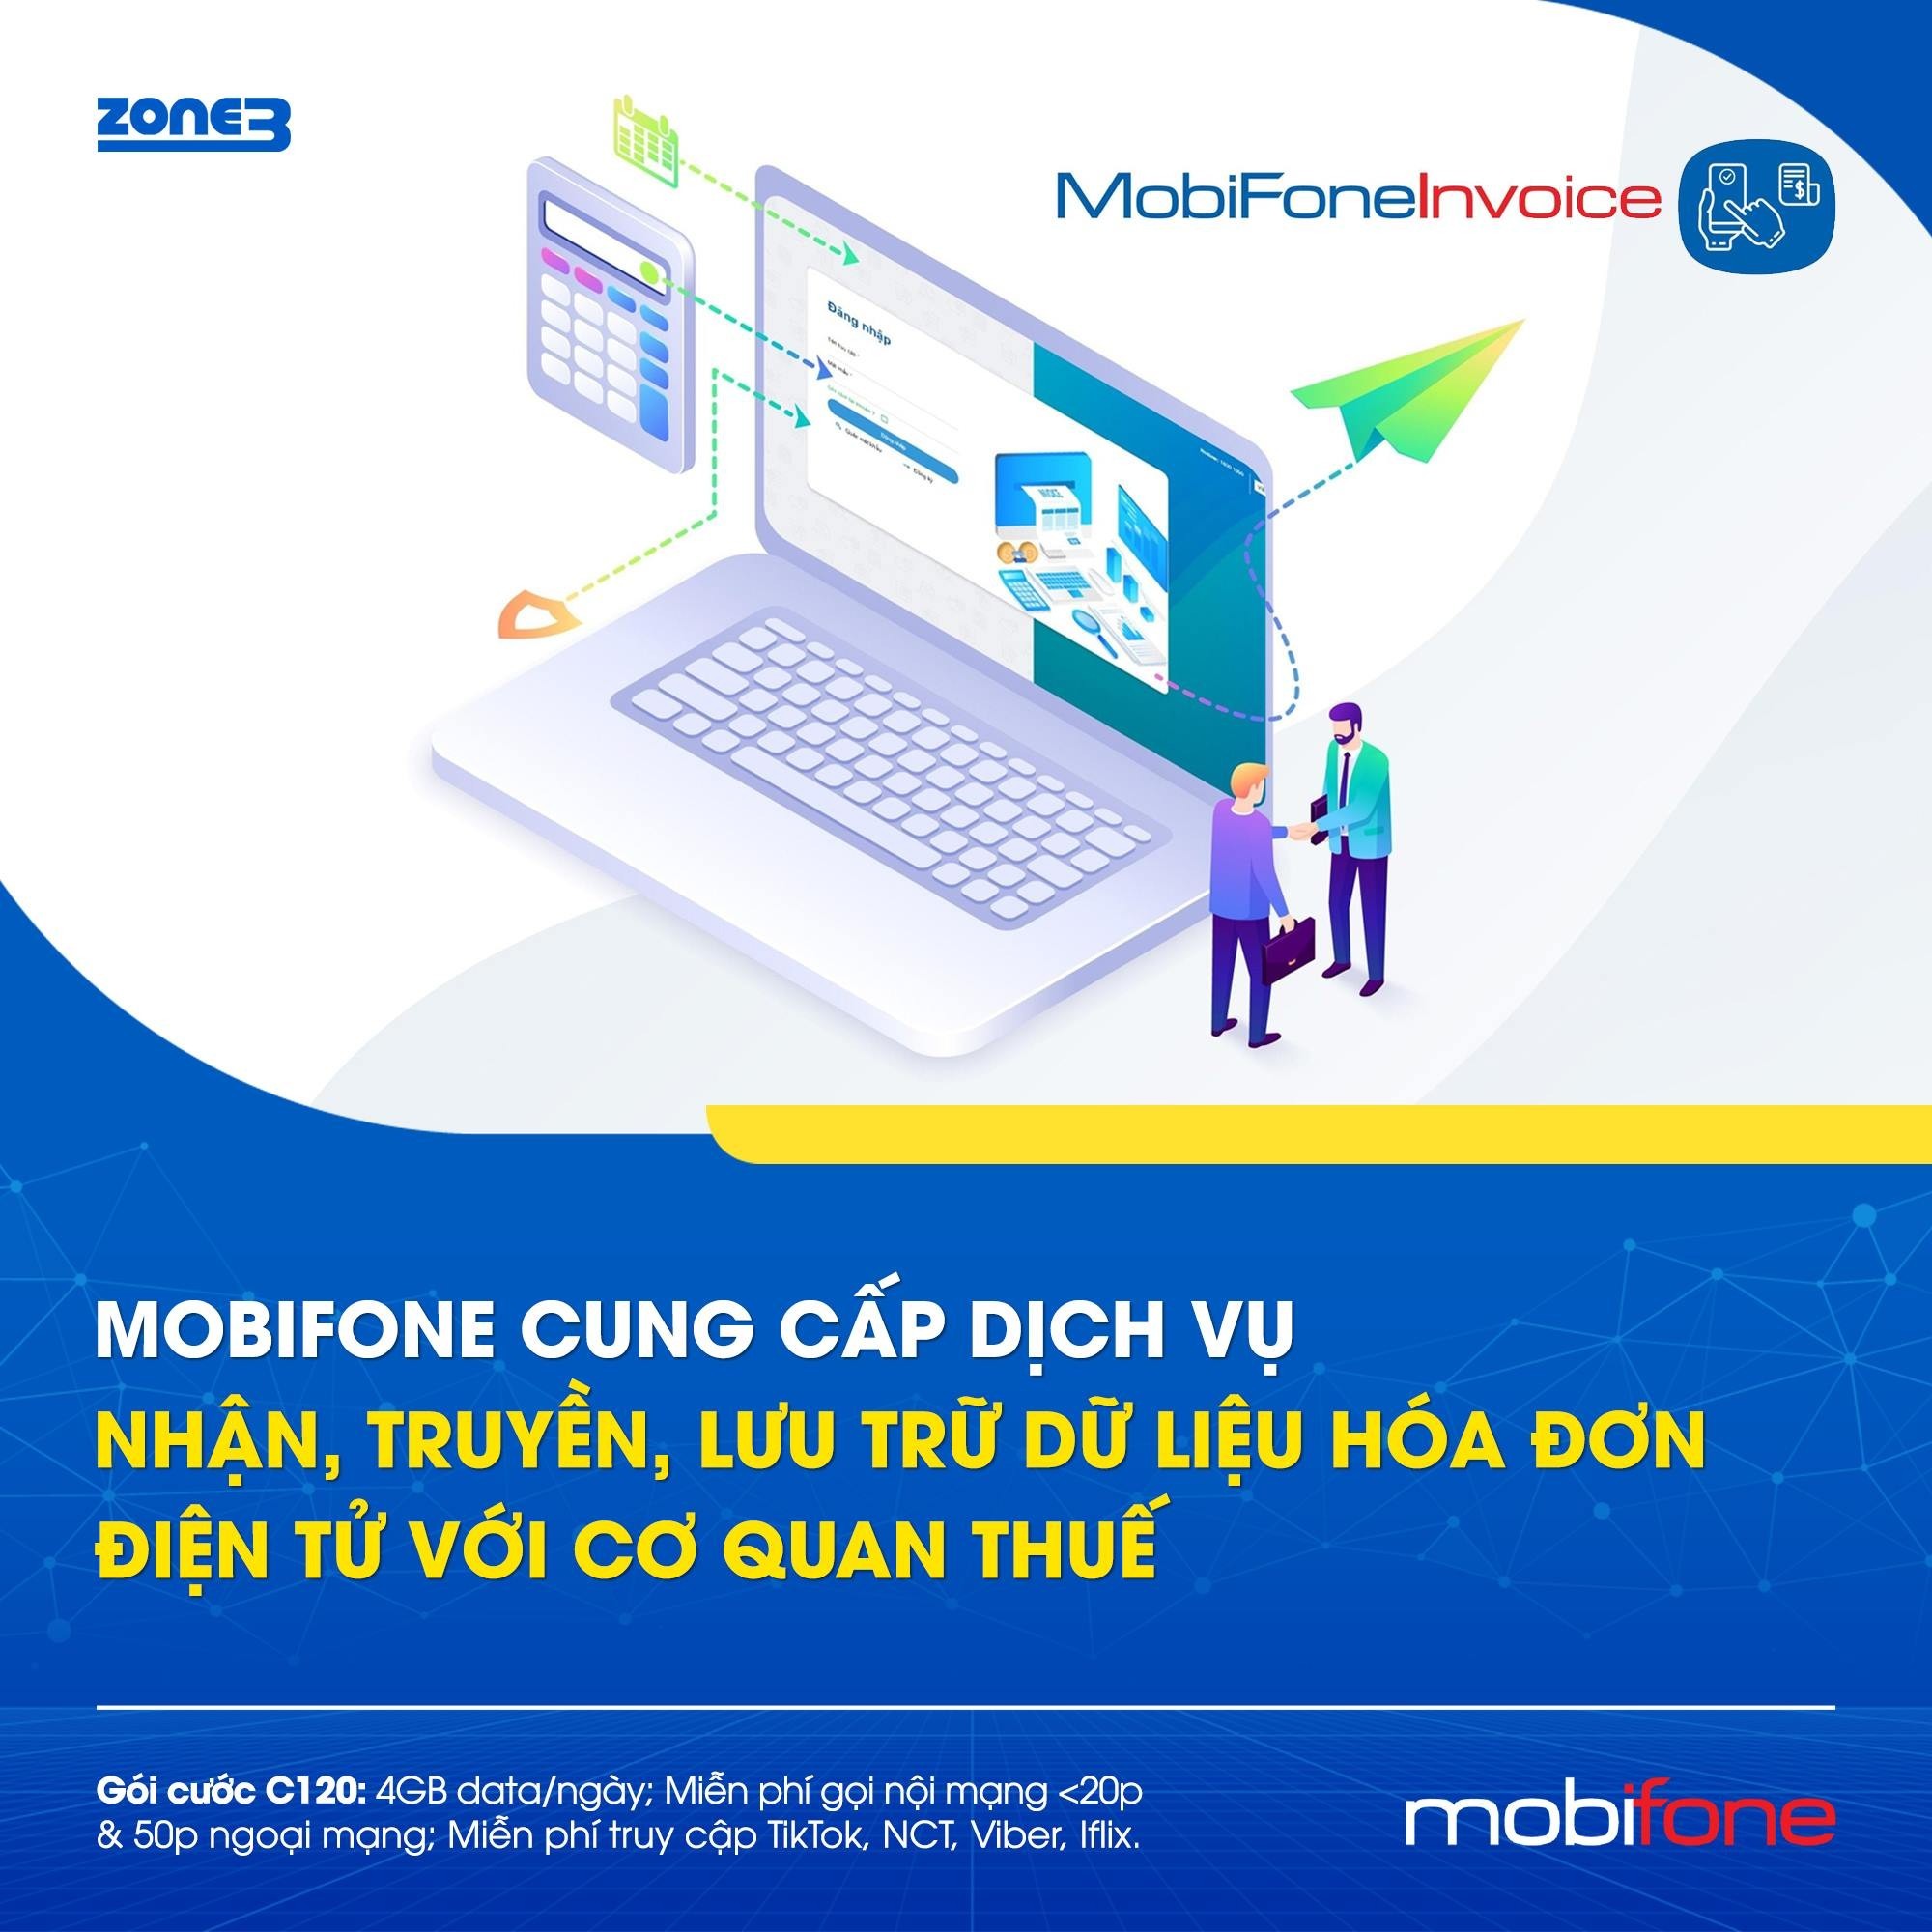 mobifone-invoice-1654603404-1655214442.jpg